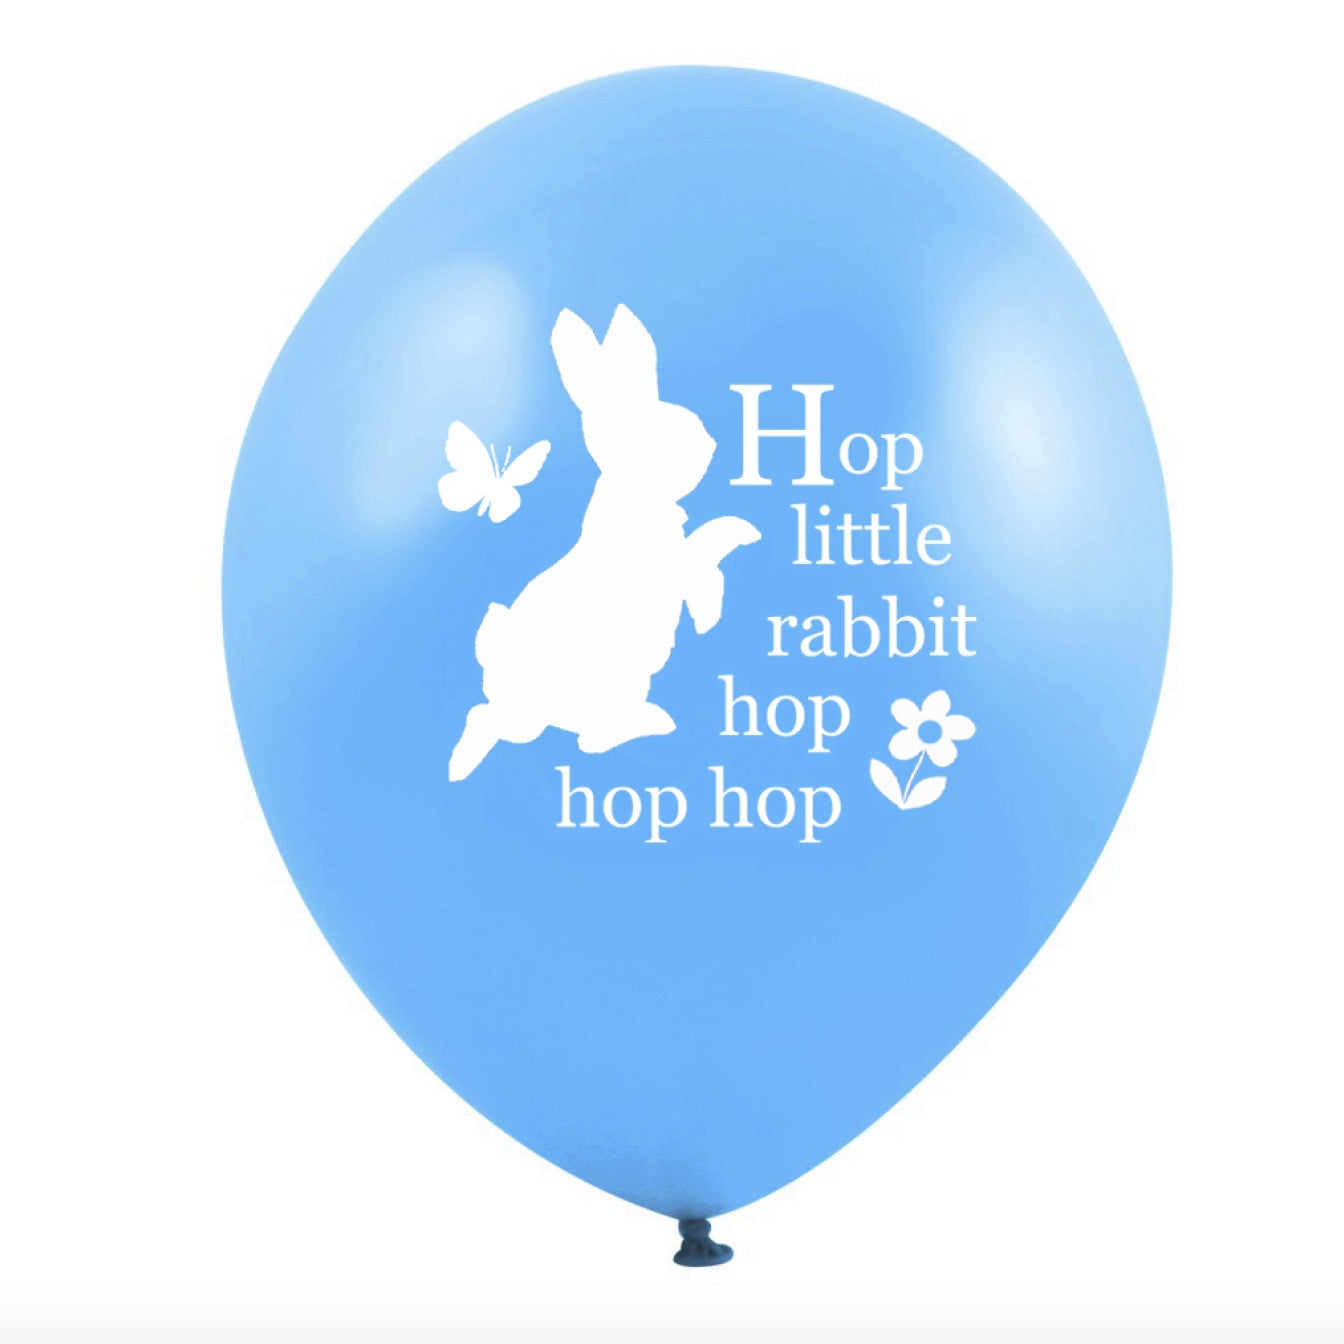 Peter Rabbit "Hop little rabbit...hop hop hop" Balloon - Cyan Blue - Balloon Party Supplies - Vintage Angel - Putti Fine Furnishings Toronto Canada